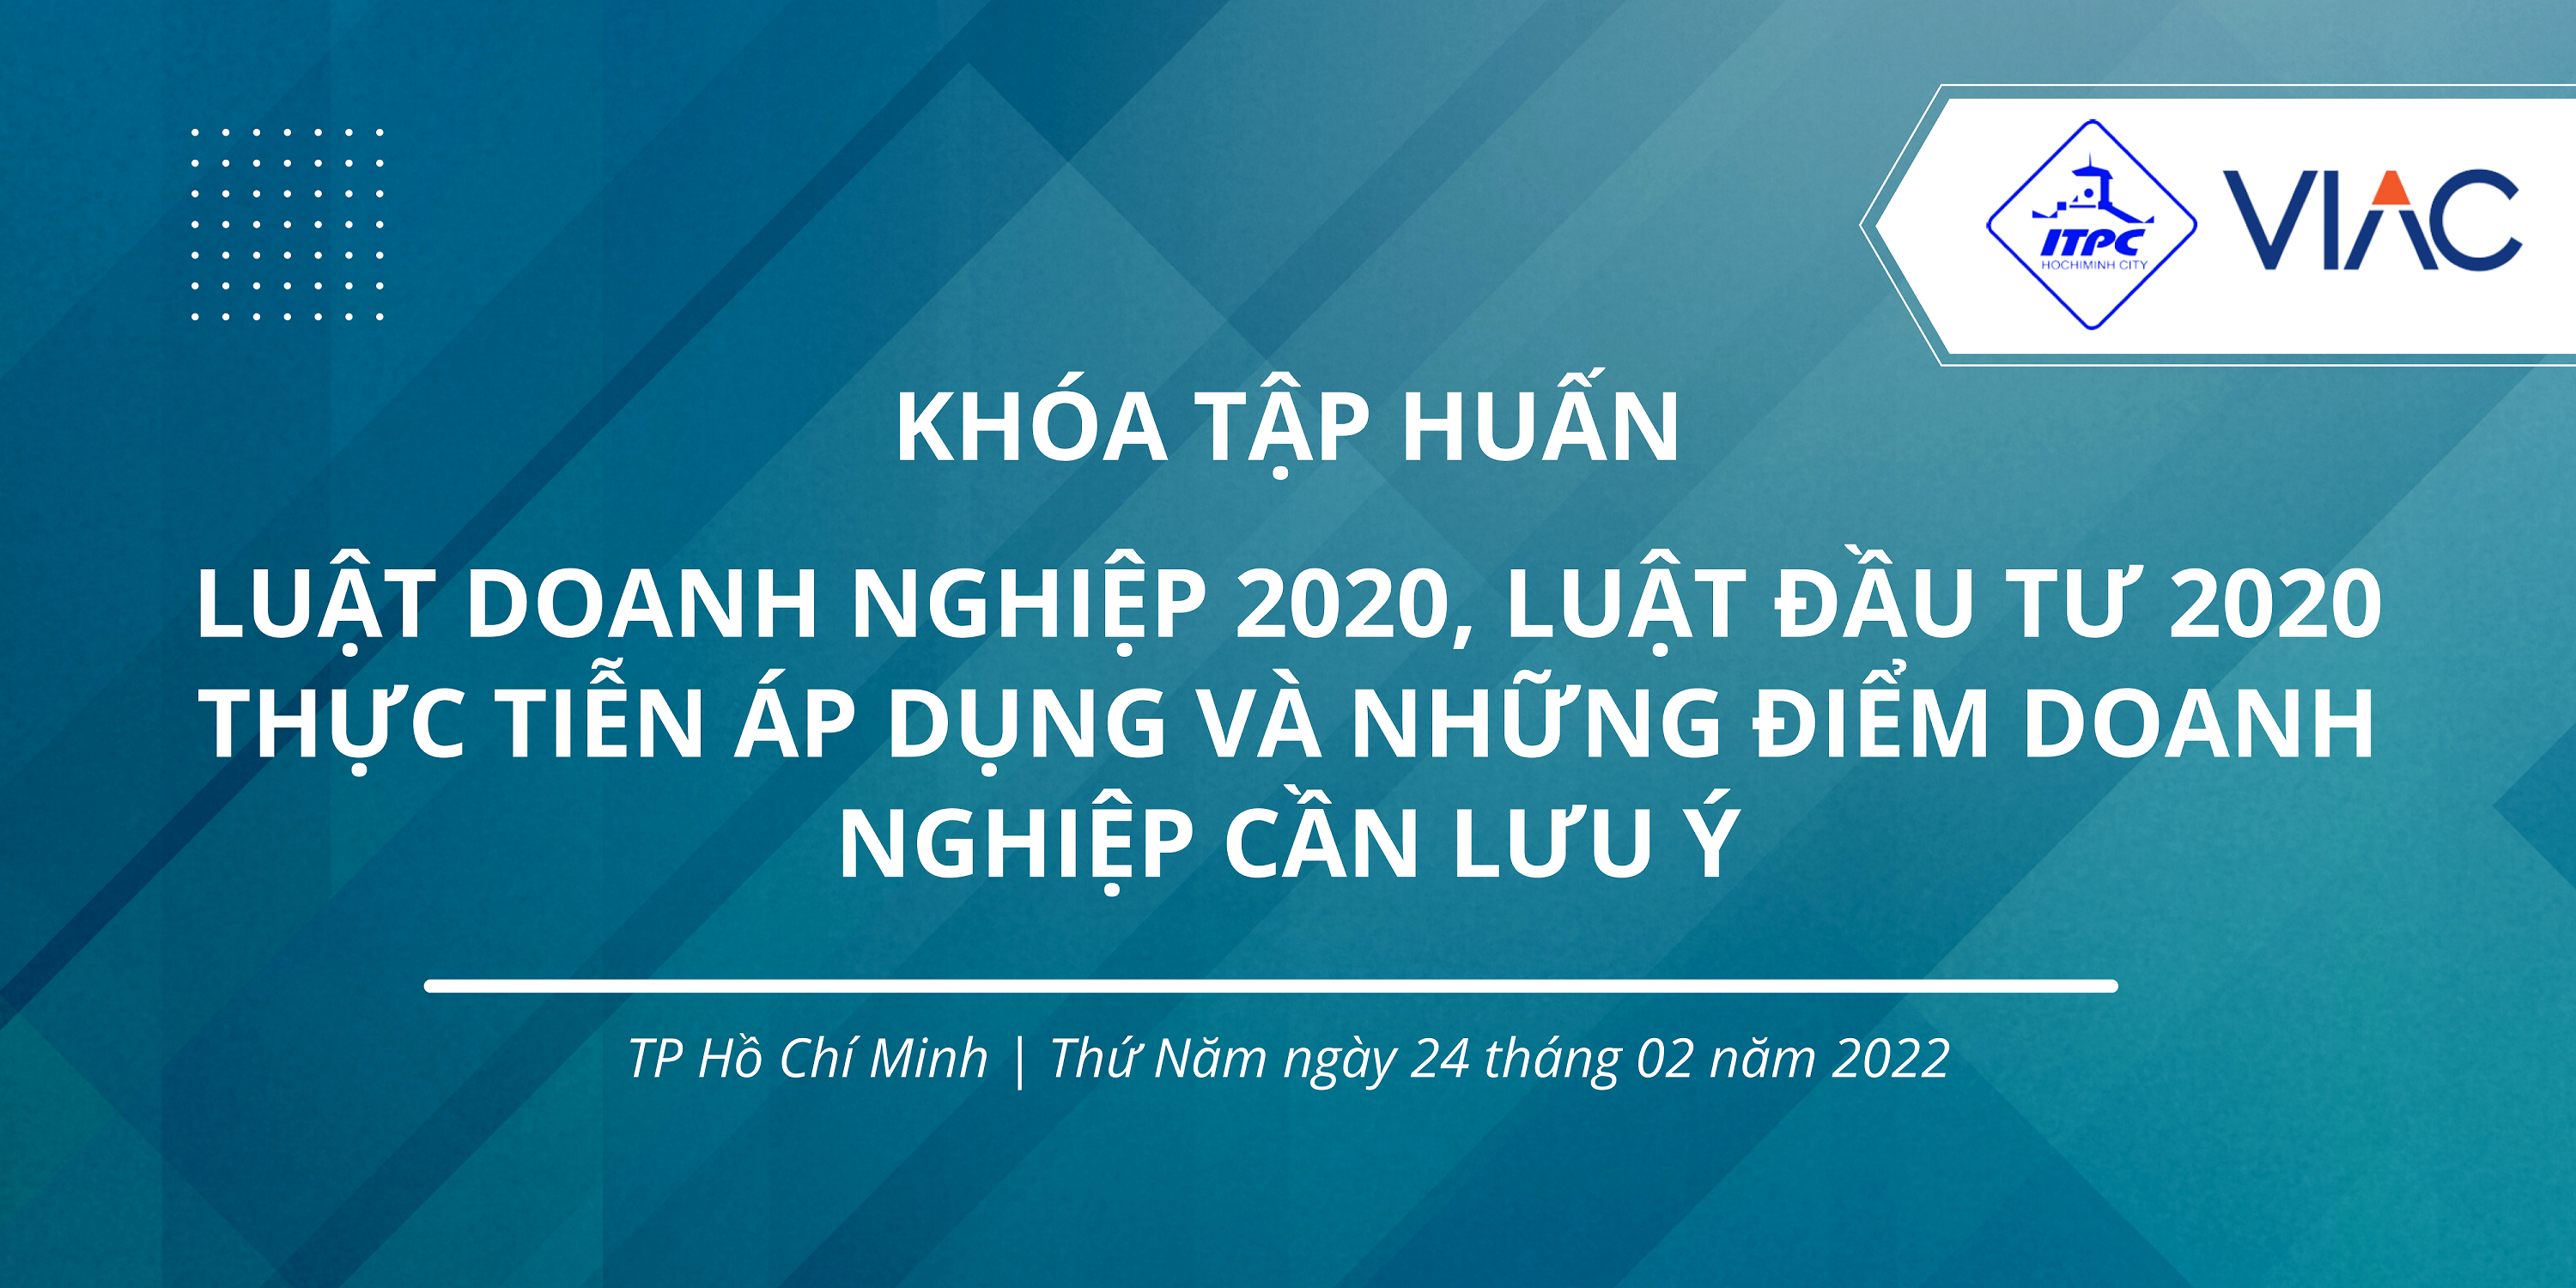 Khoa Tap Huan Luat Doanh Nghiep 2020 Luat Dau Tu 2020 Thuc Tien Ap Dung Va Nhung Diem Doanh Nghiep Can Luu Y